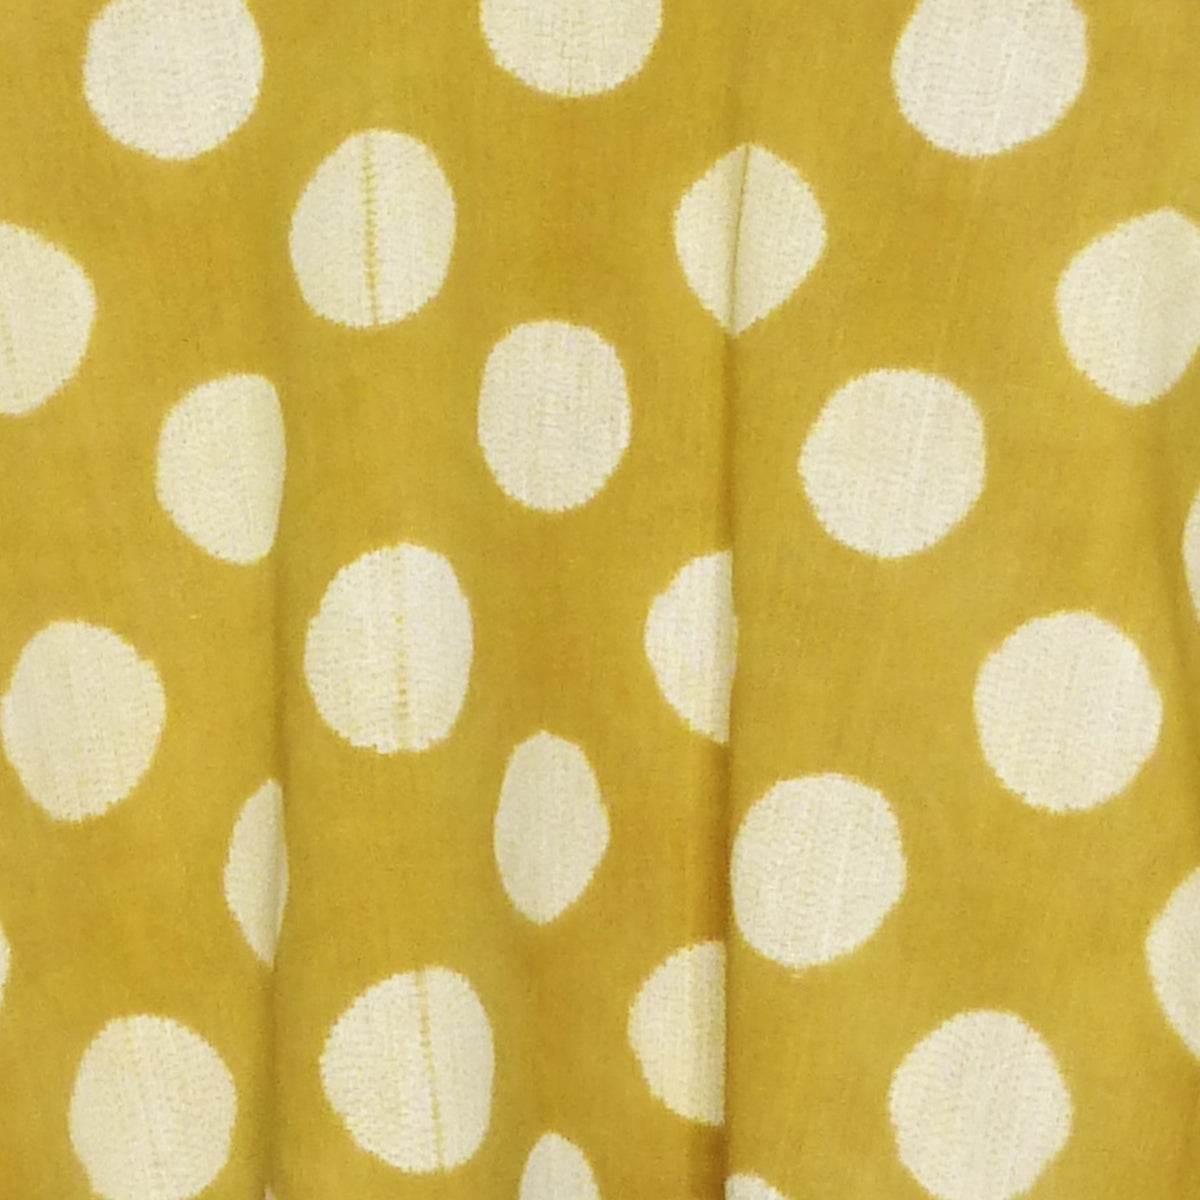 Warm Yellow-White Polka Dots & Zig Zag Dashes Crop Top cum Saree Blouse - 3